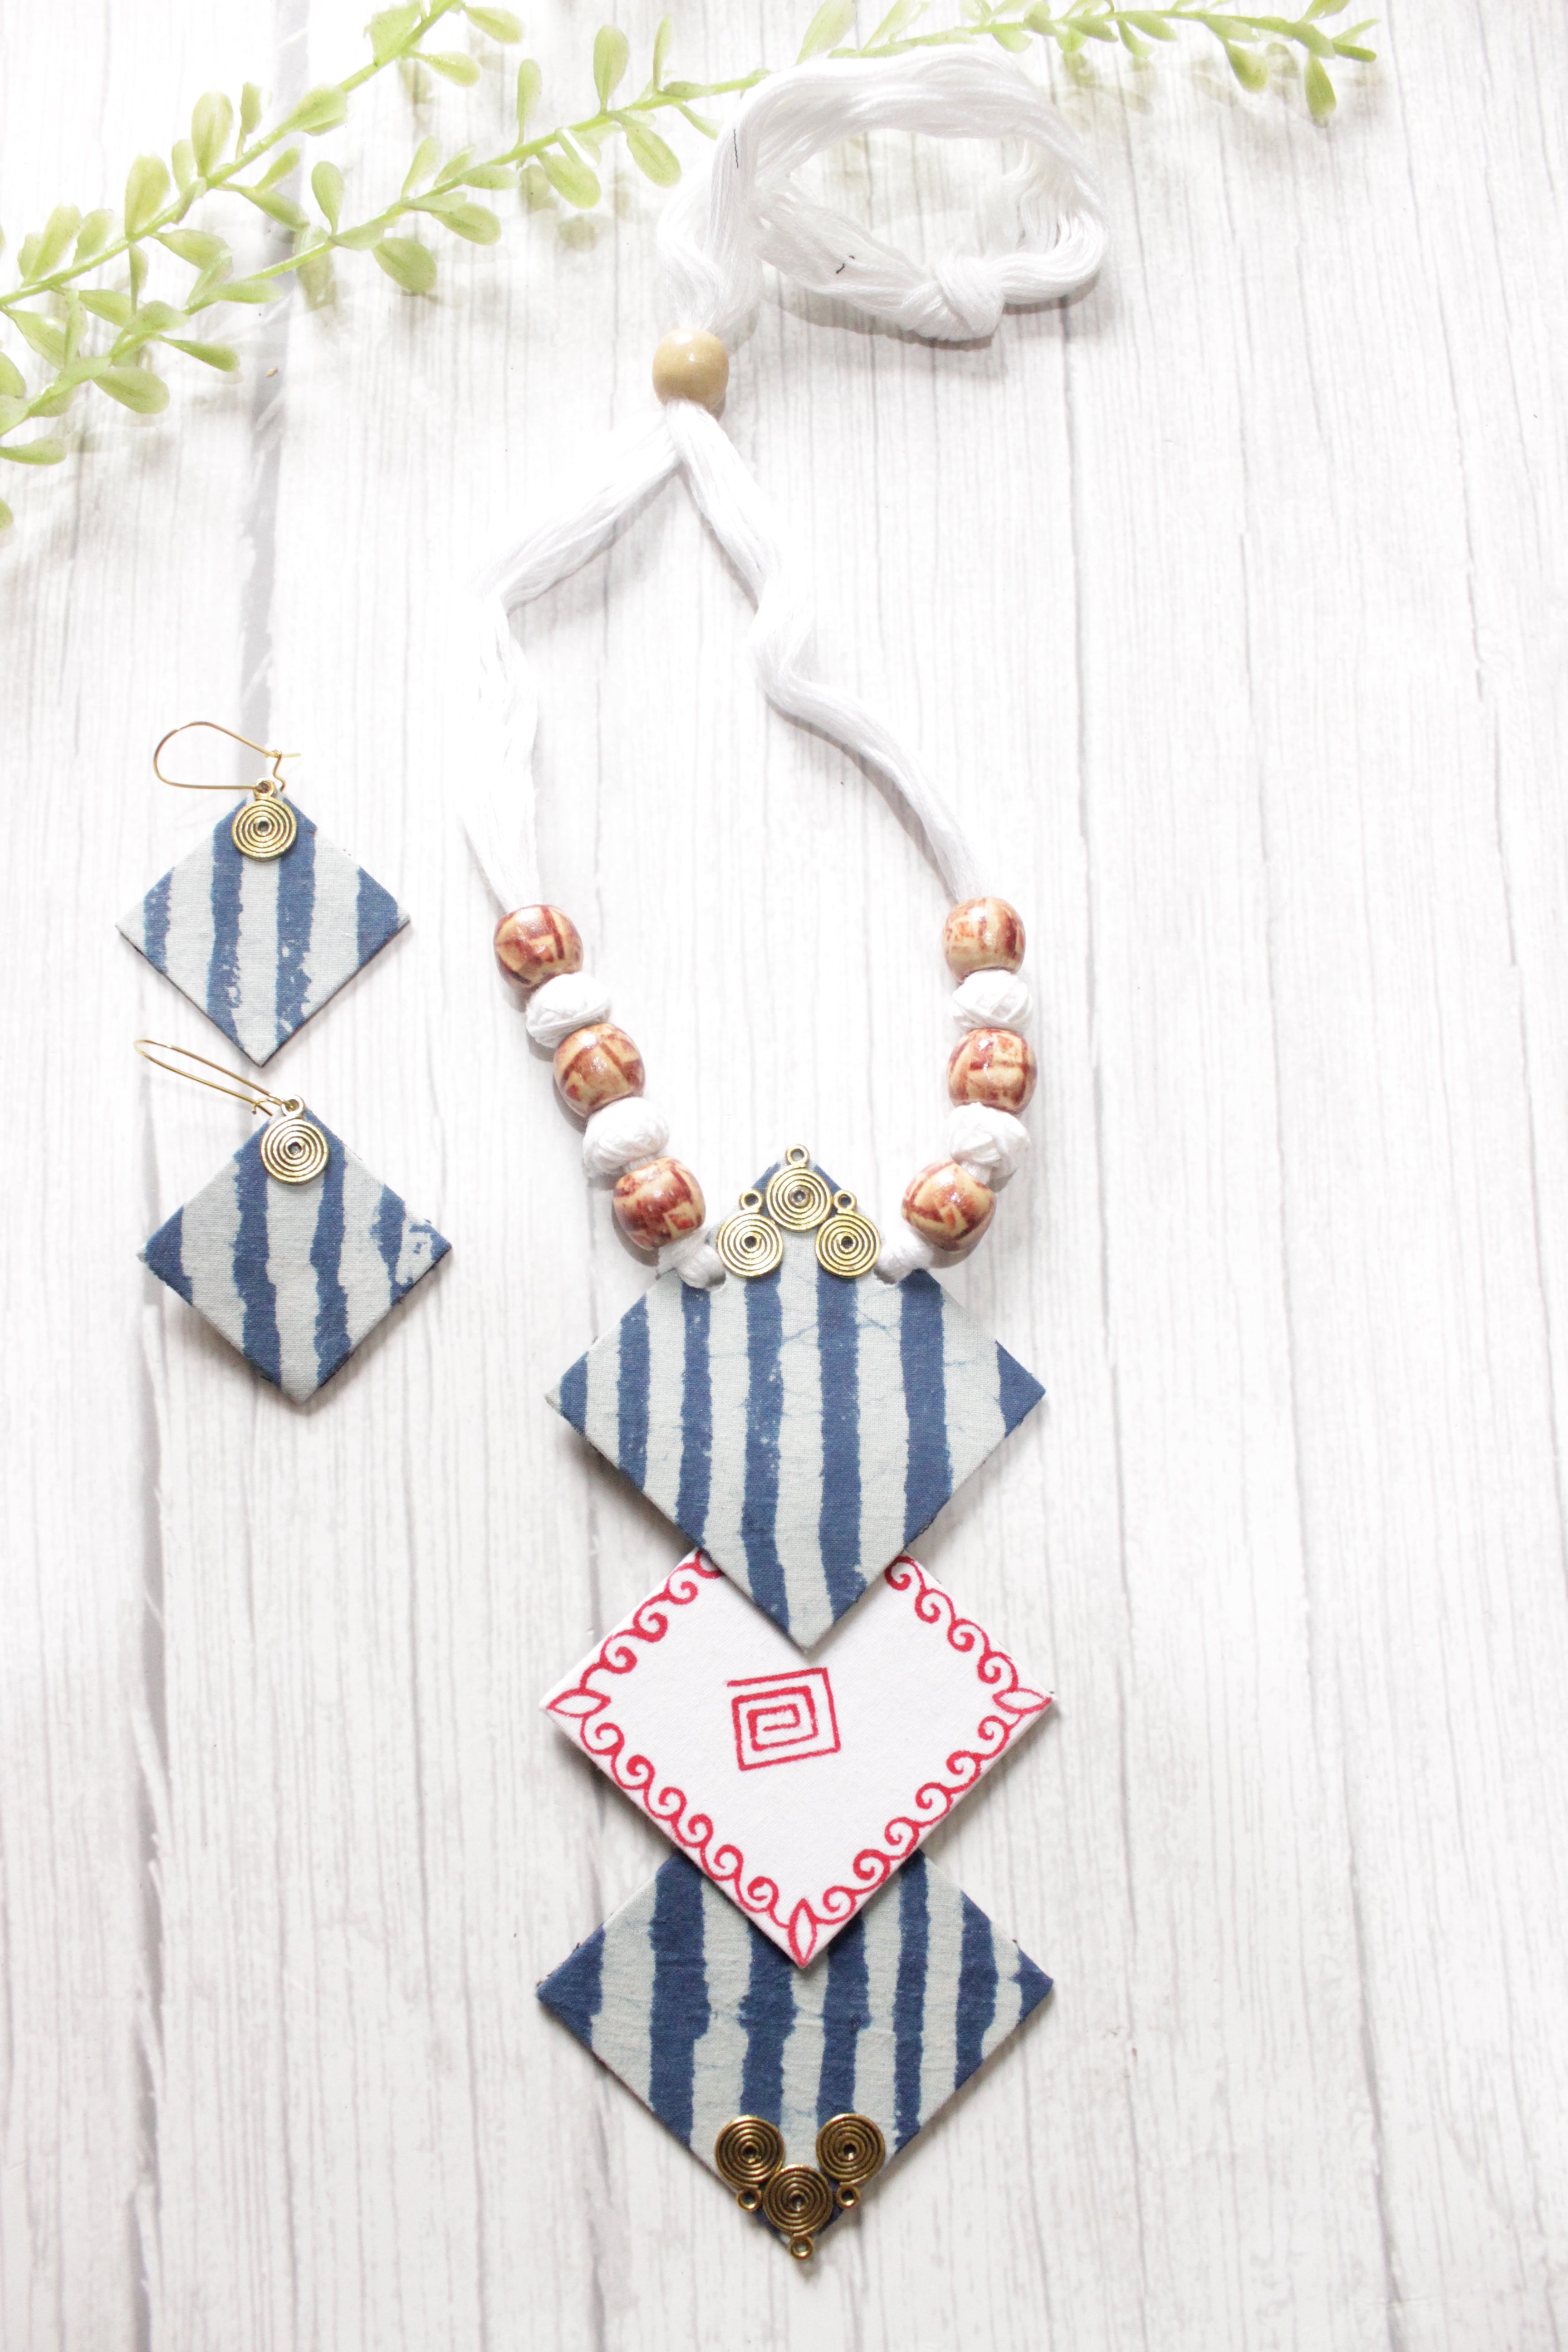 Indigo & White Block Printed Fabric Necklace Set with Adjustable Thread Closure Necklace Set